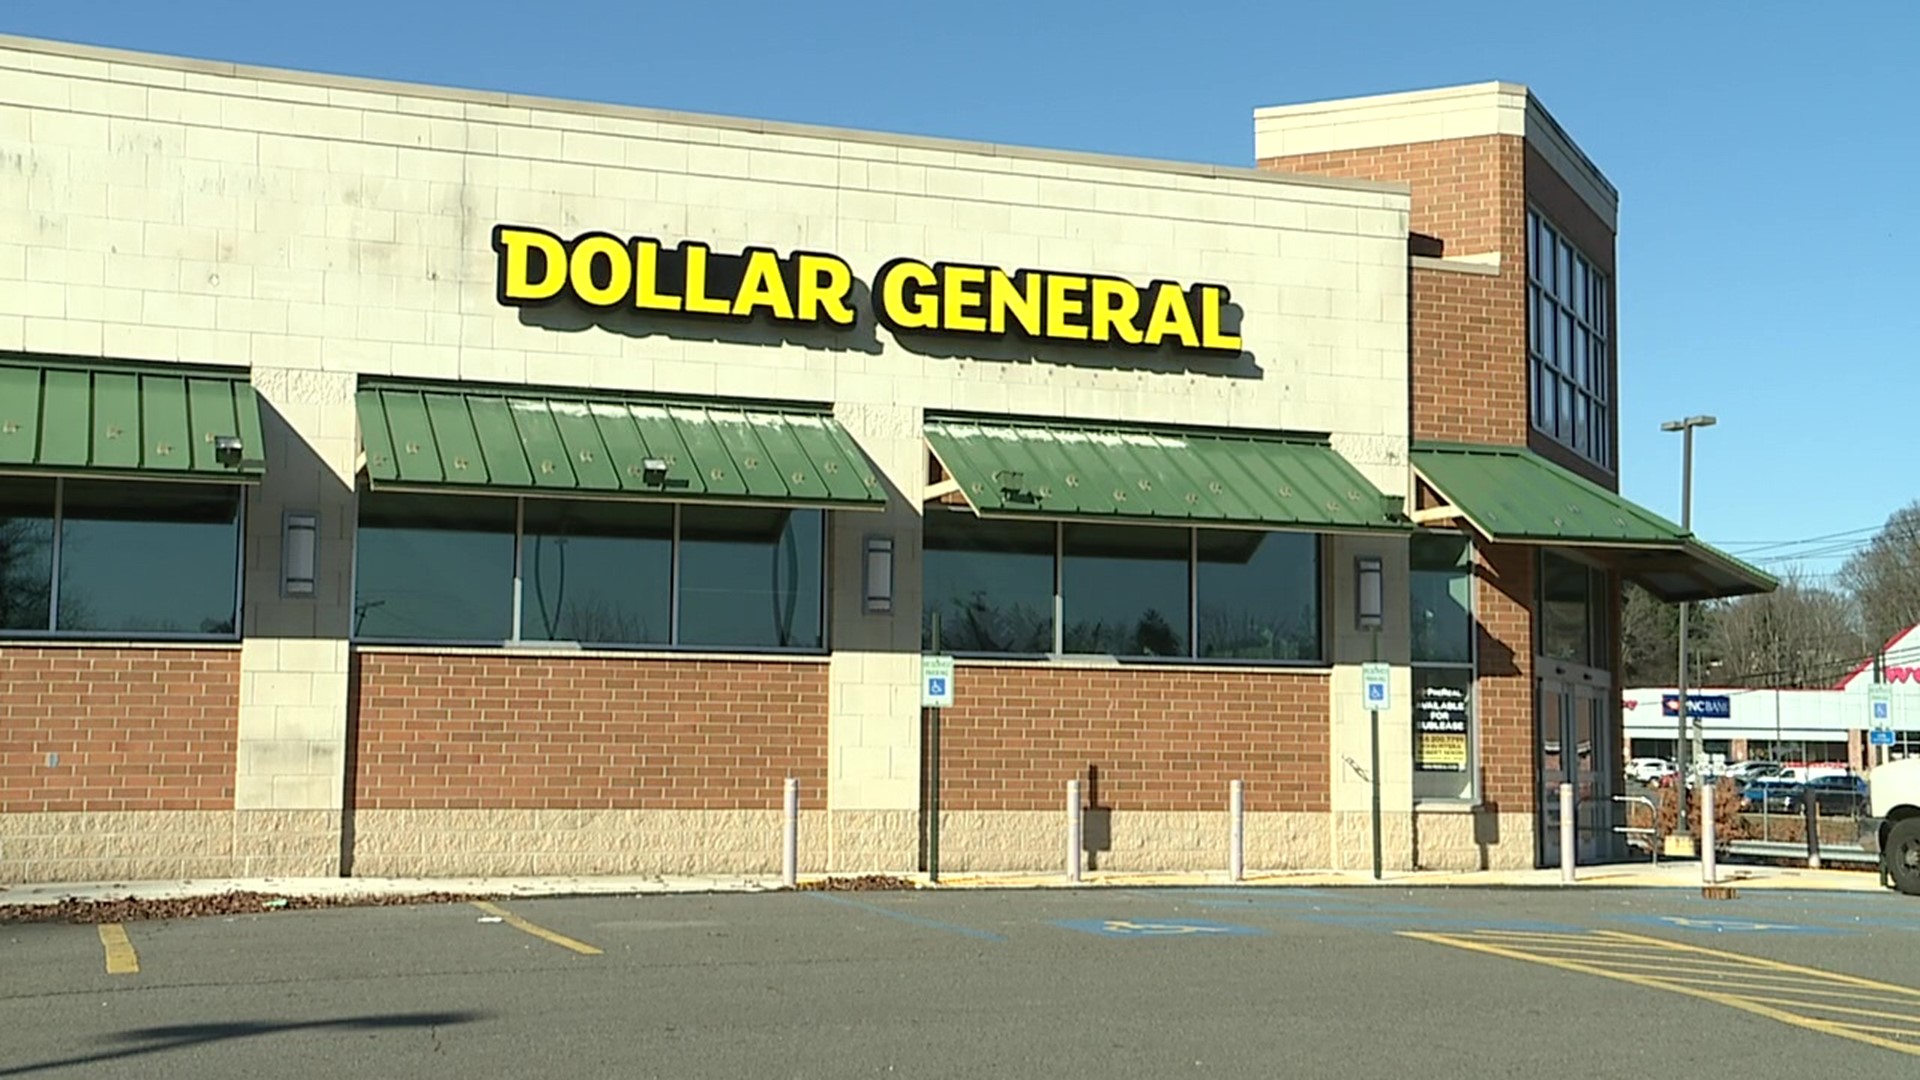 Back Mountain Dollar General stores abundant